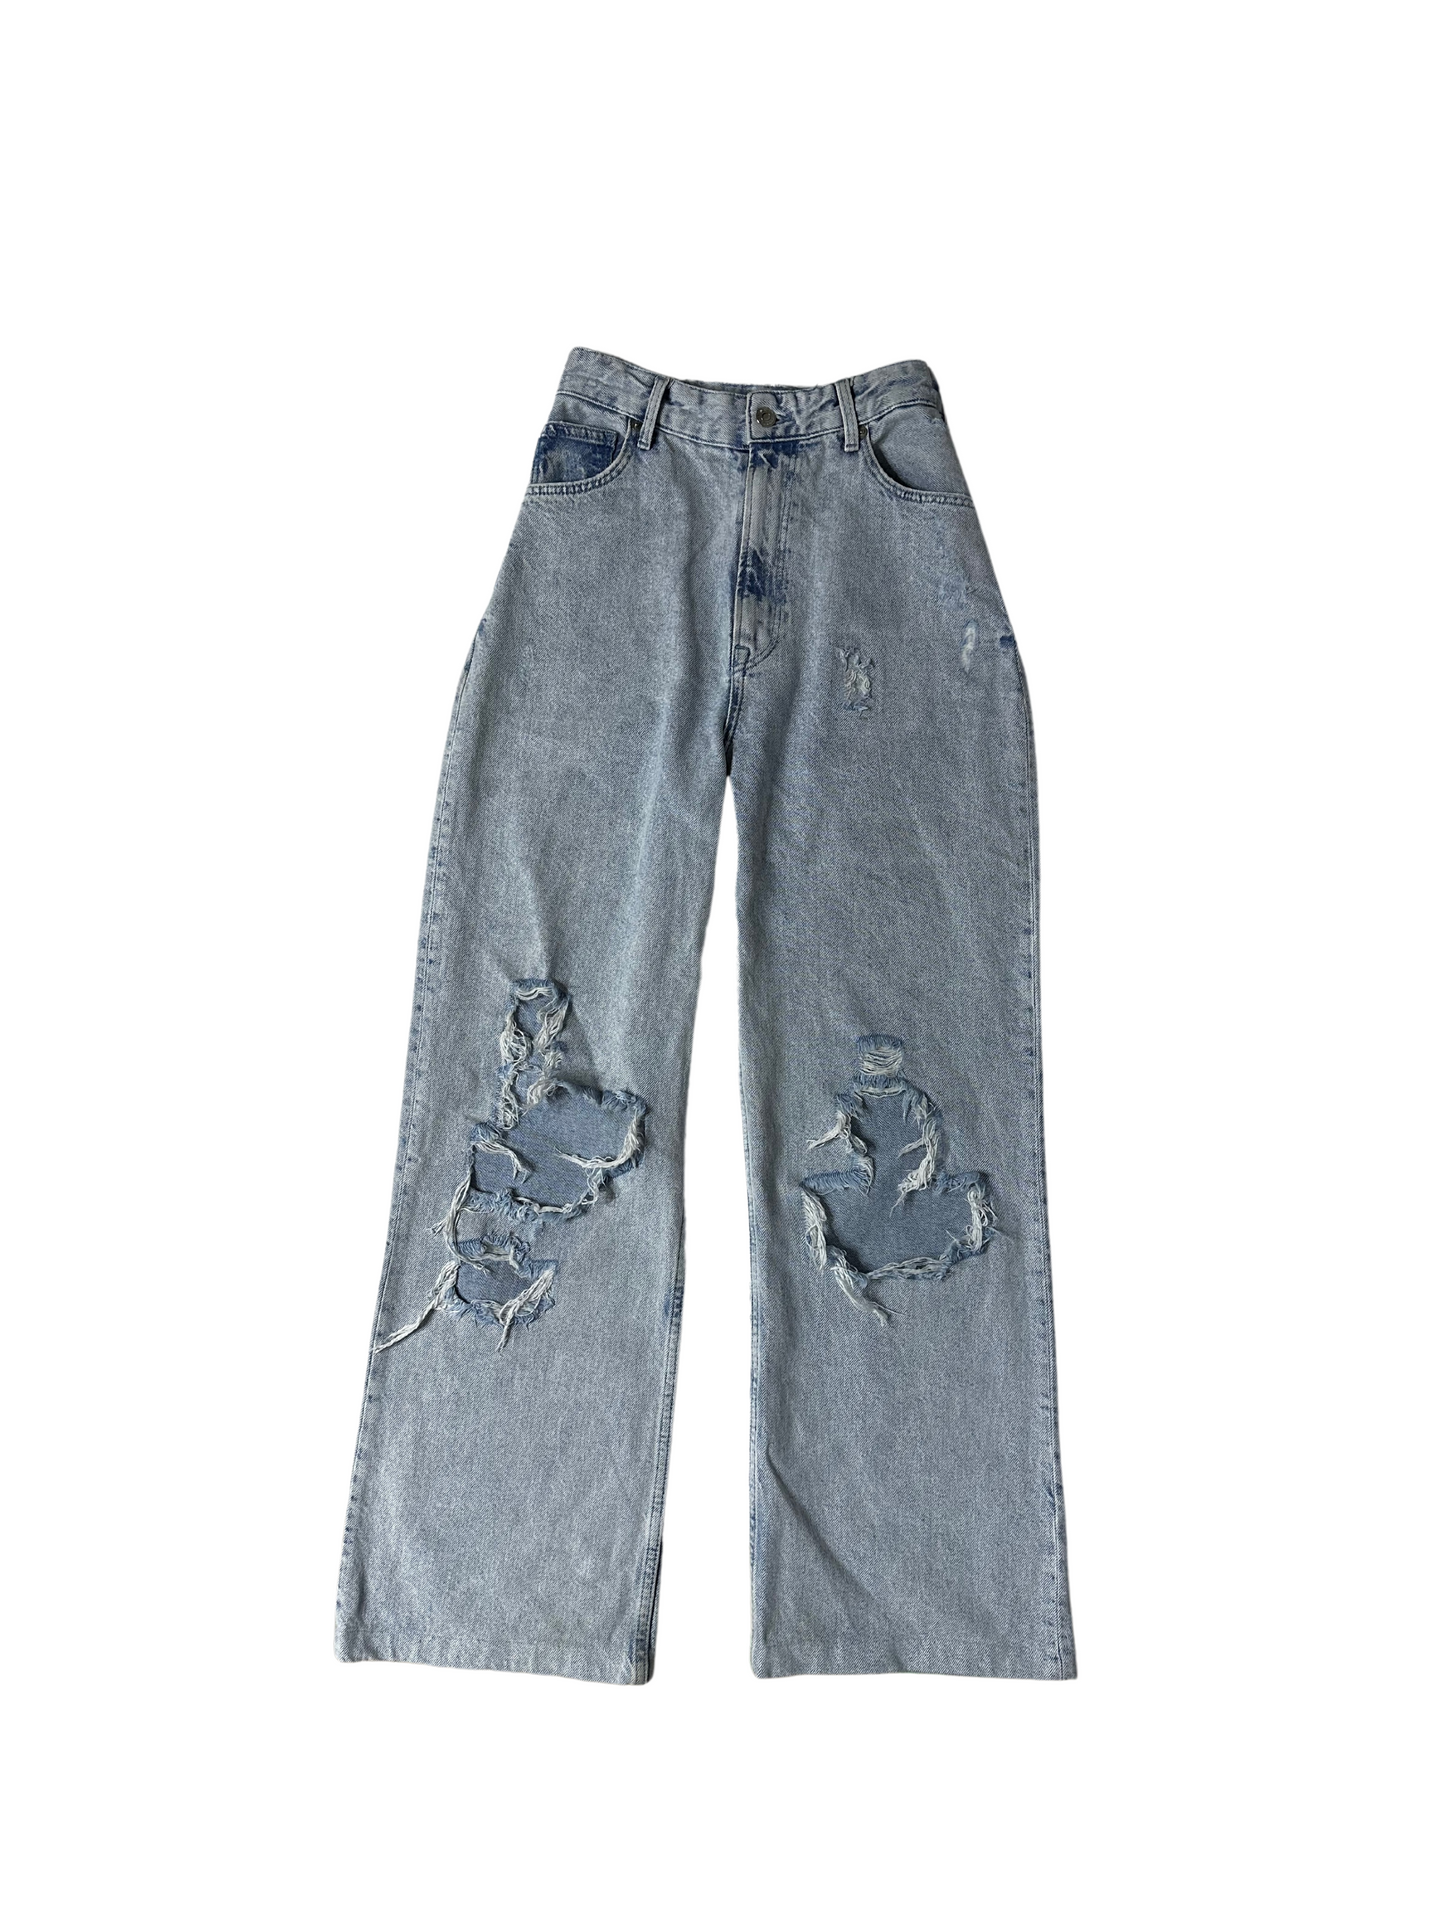 Ripped Jeans High Waist - Bershka